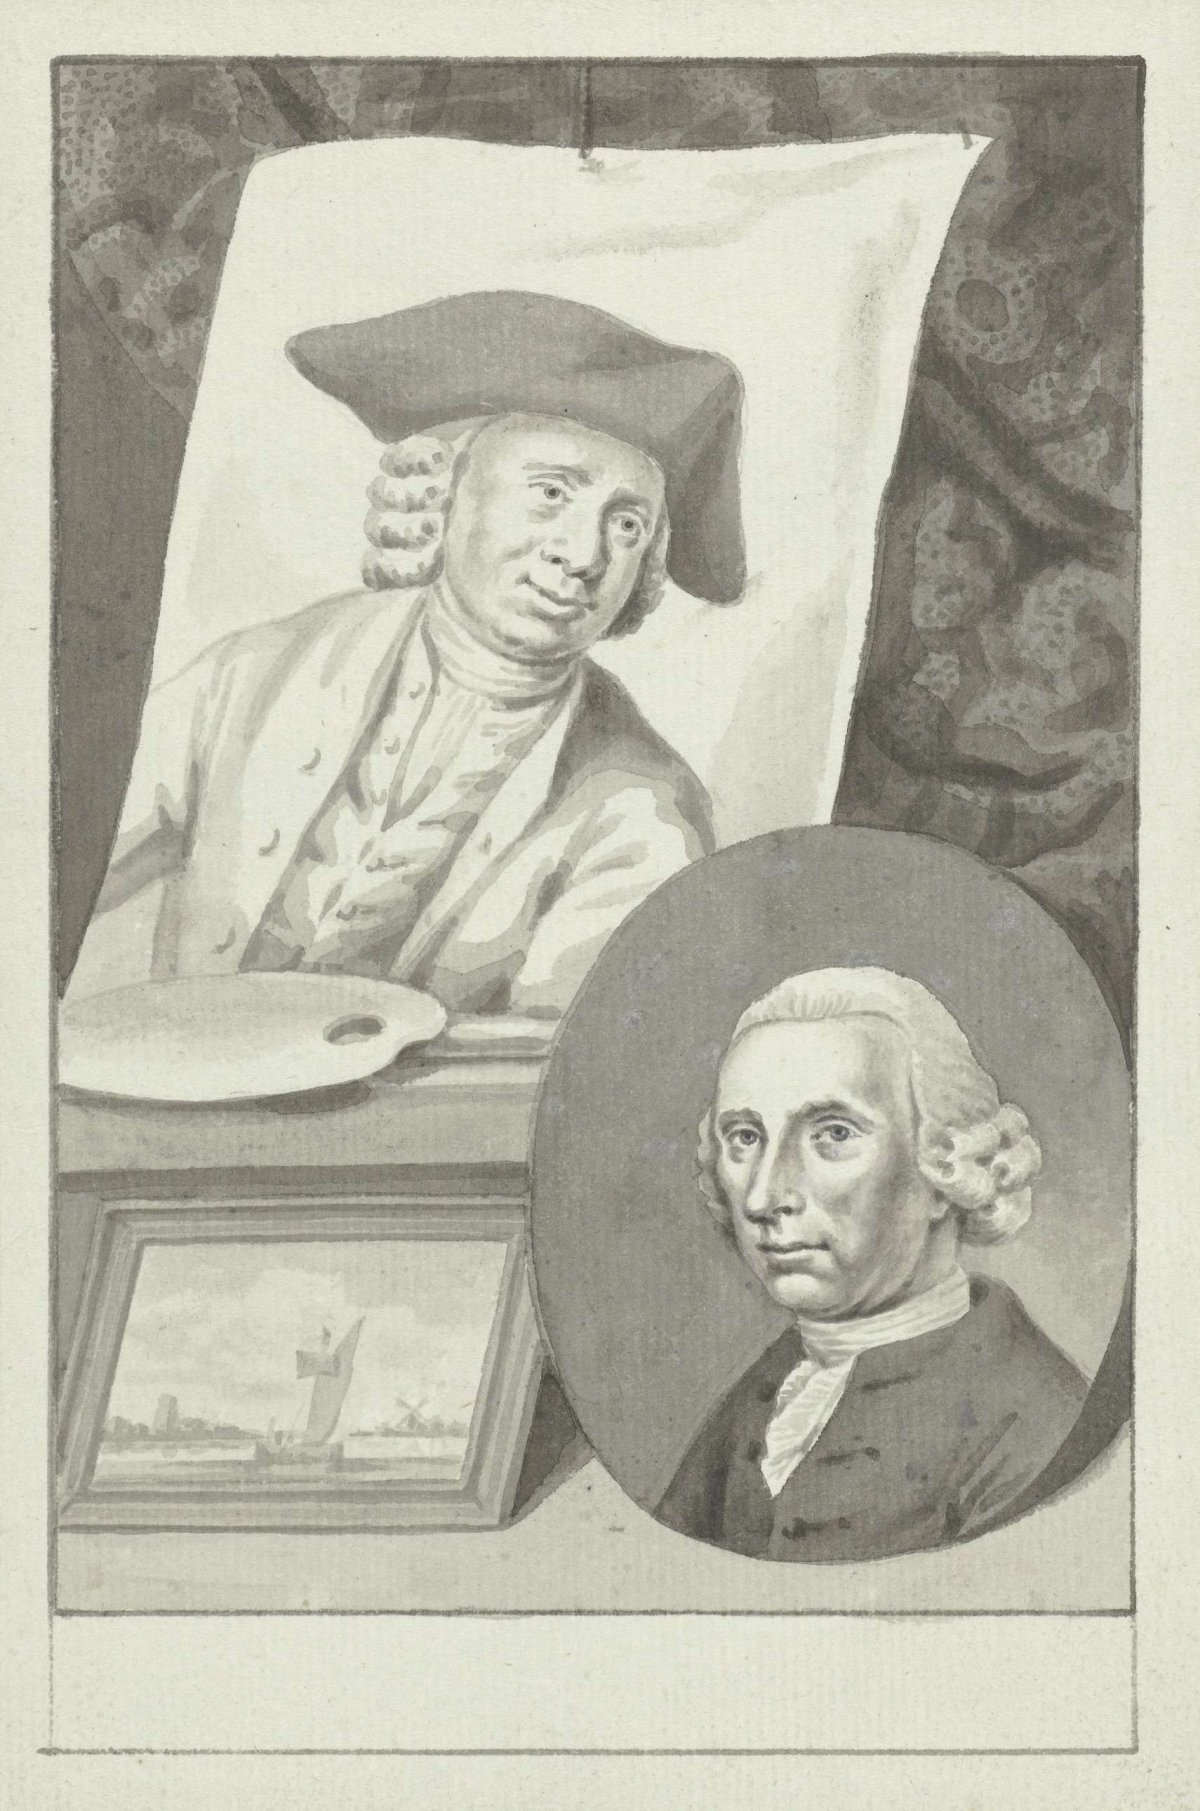 Portrait of an artist, Roeland van Eynden, c. 1757 - c. 1819